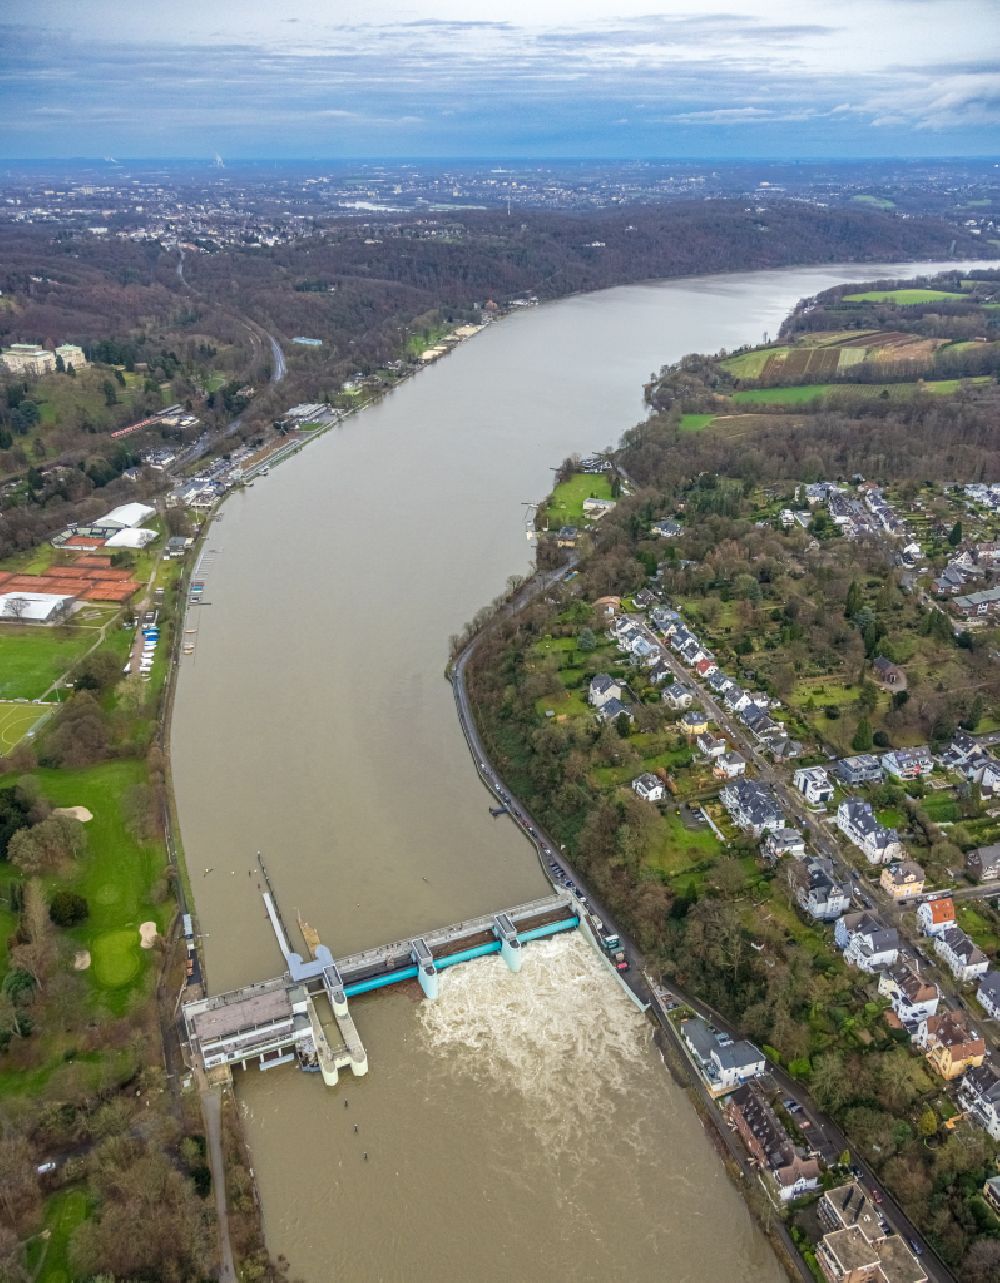 Aerial image Essen - Flooded water on Weir on the banks of the flux flow Baldeneysee Stauwehr in the district Werden in Essen in the state North Rhine-Westphalia, Germany